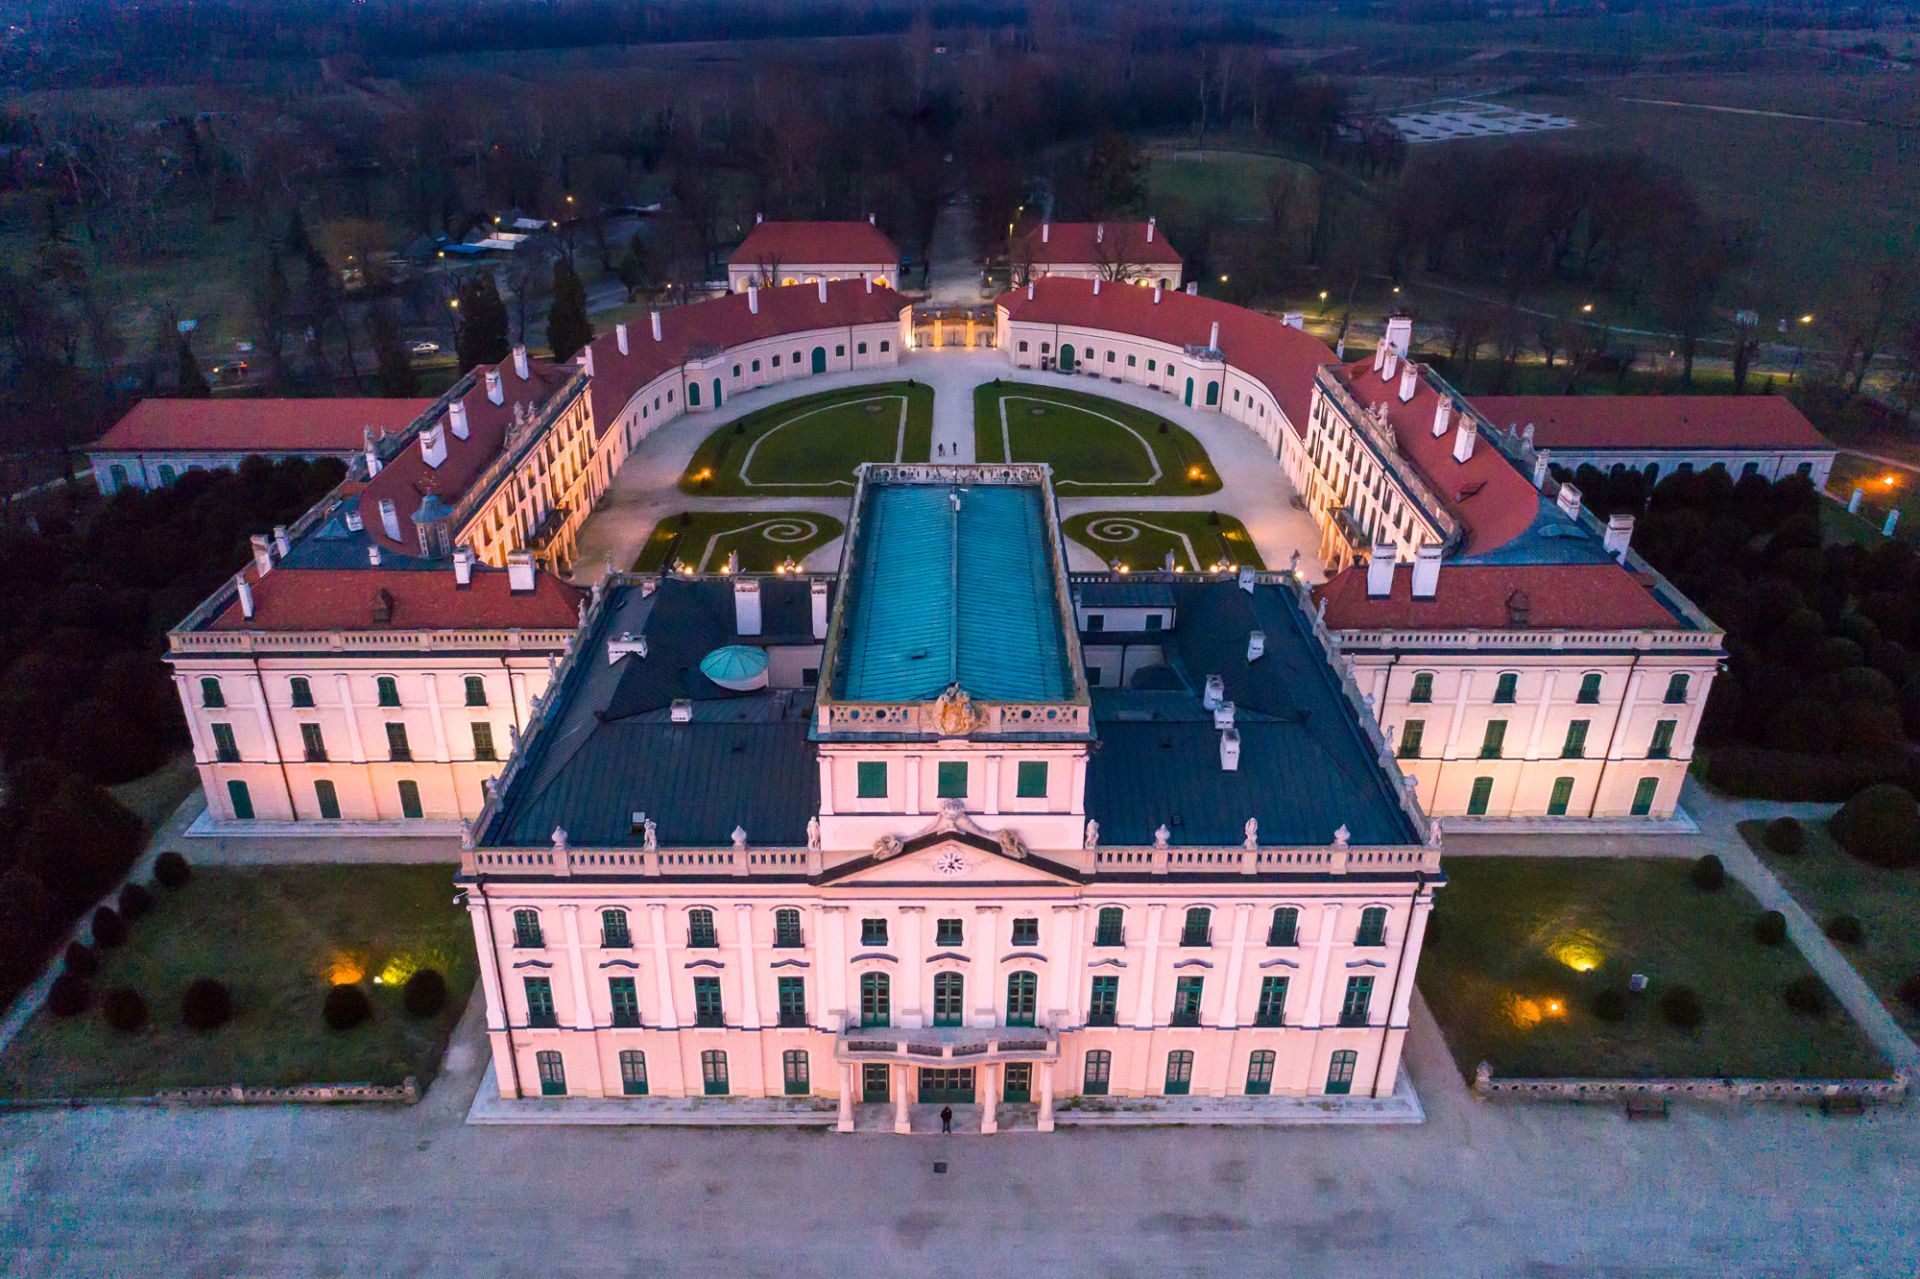 Esterházy Castle in Fertőd, Hungary